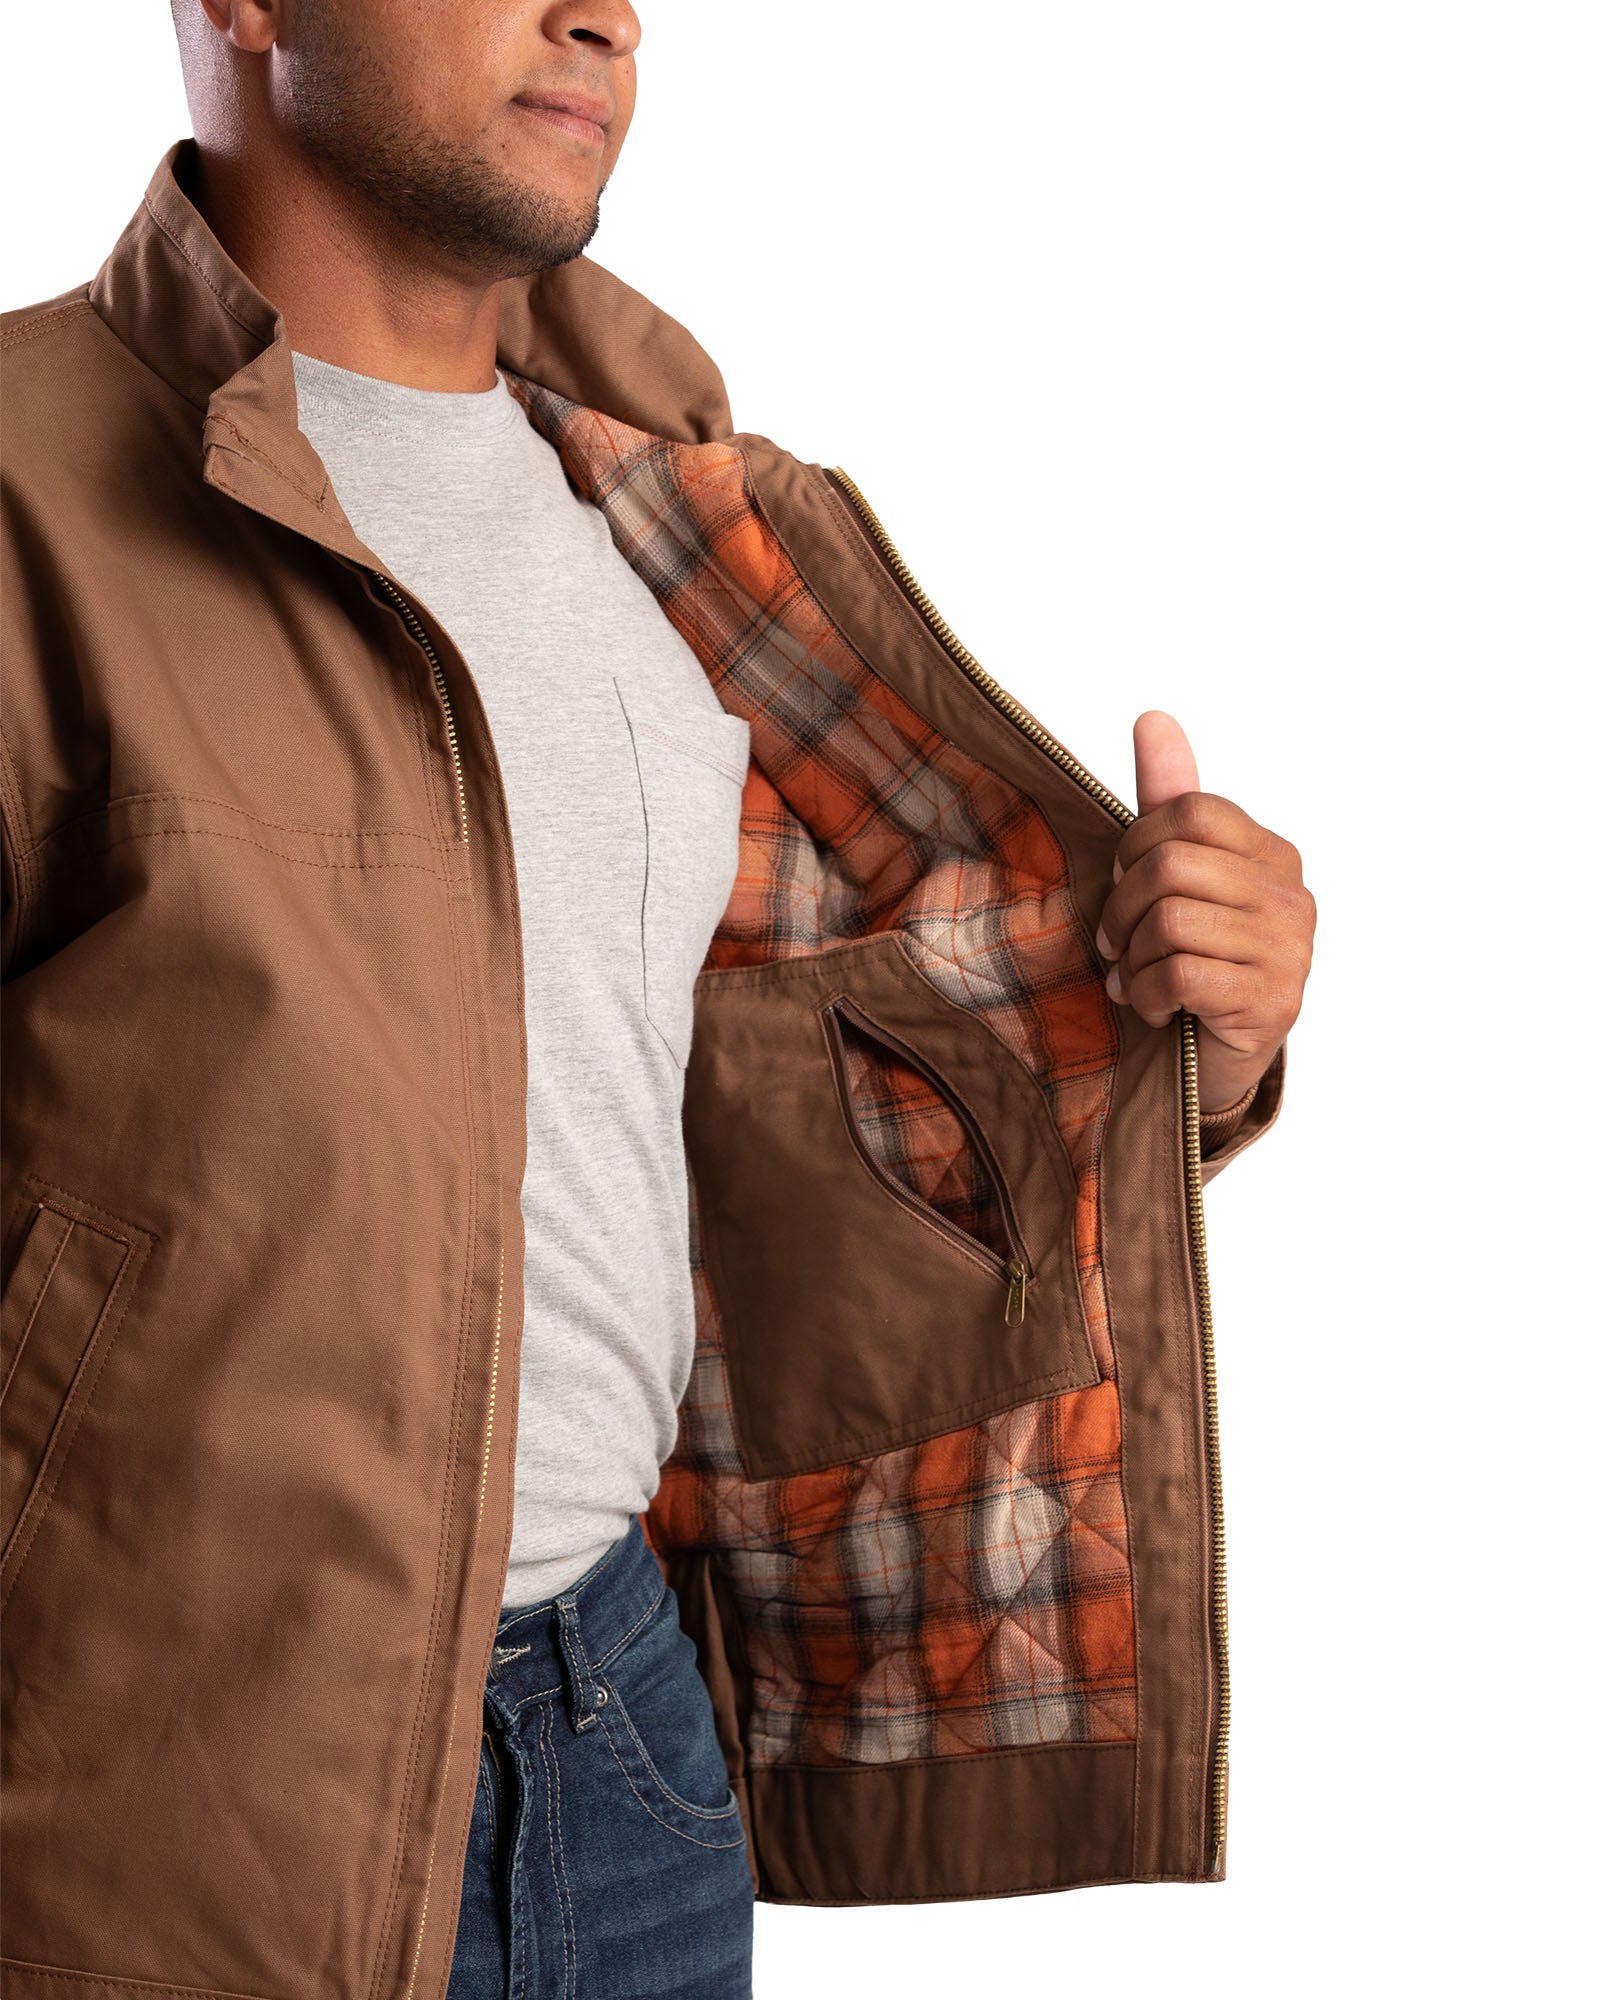 JL17DW Heartland Washed Duck Flannel-Lined Jacket